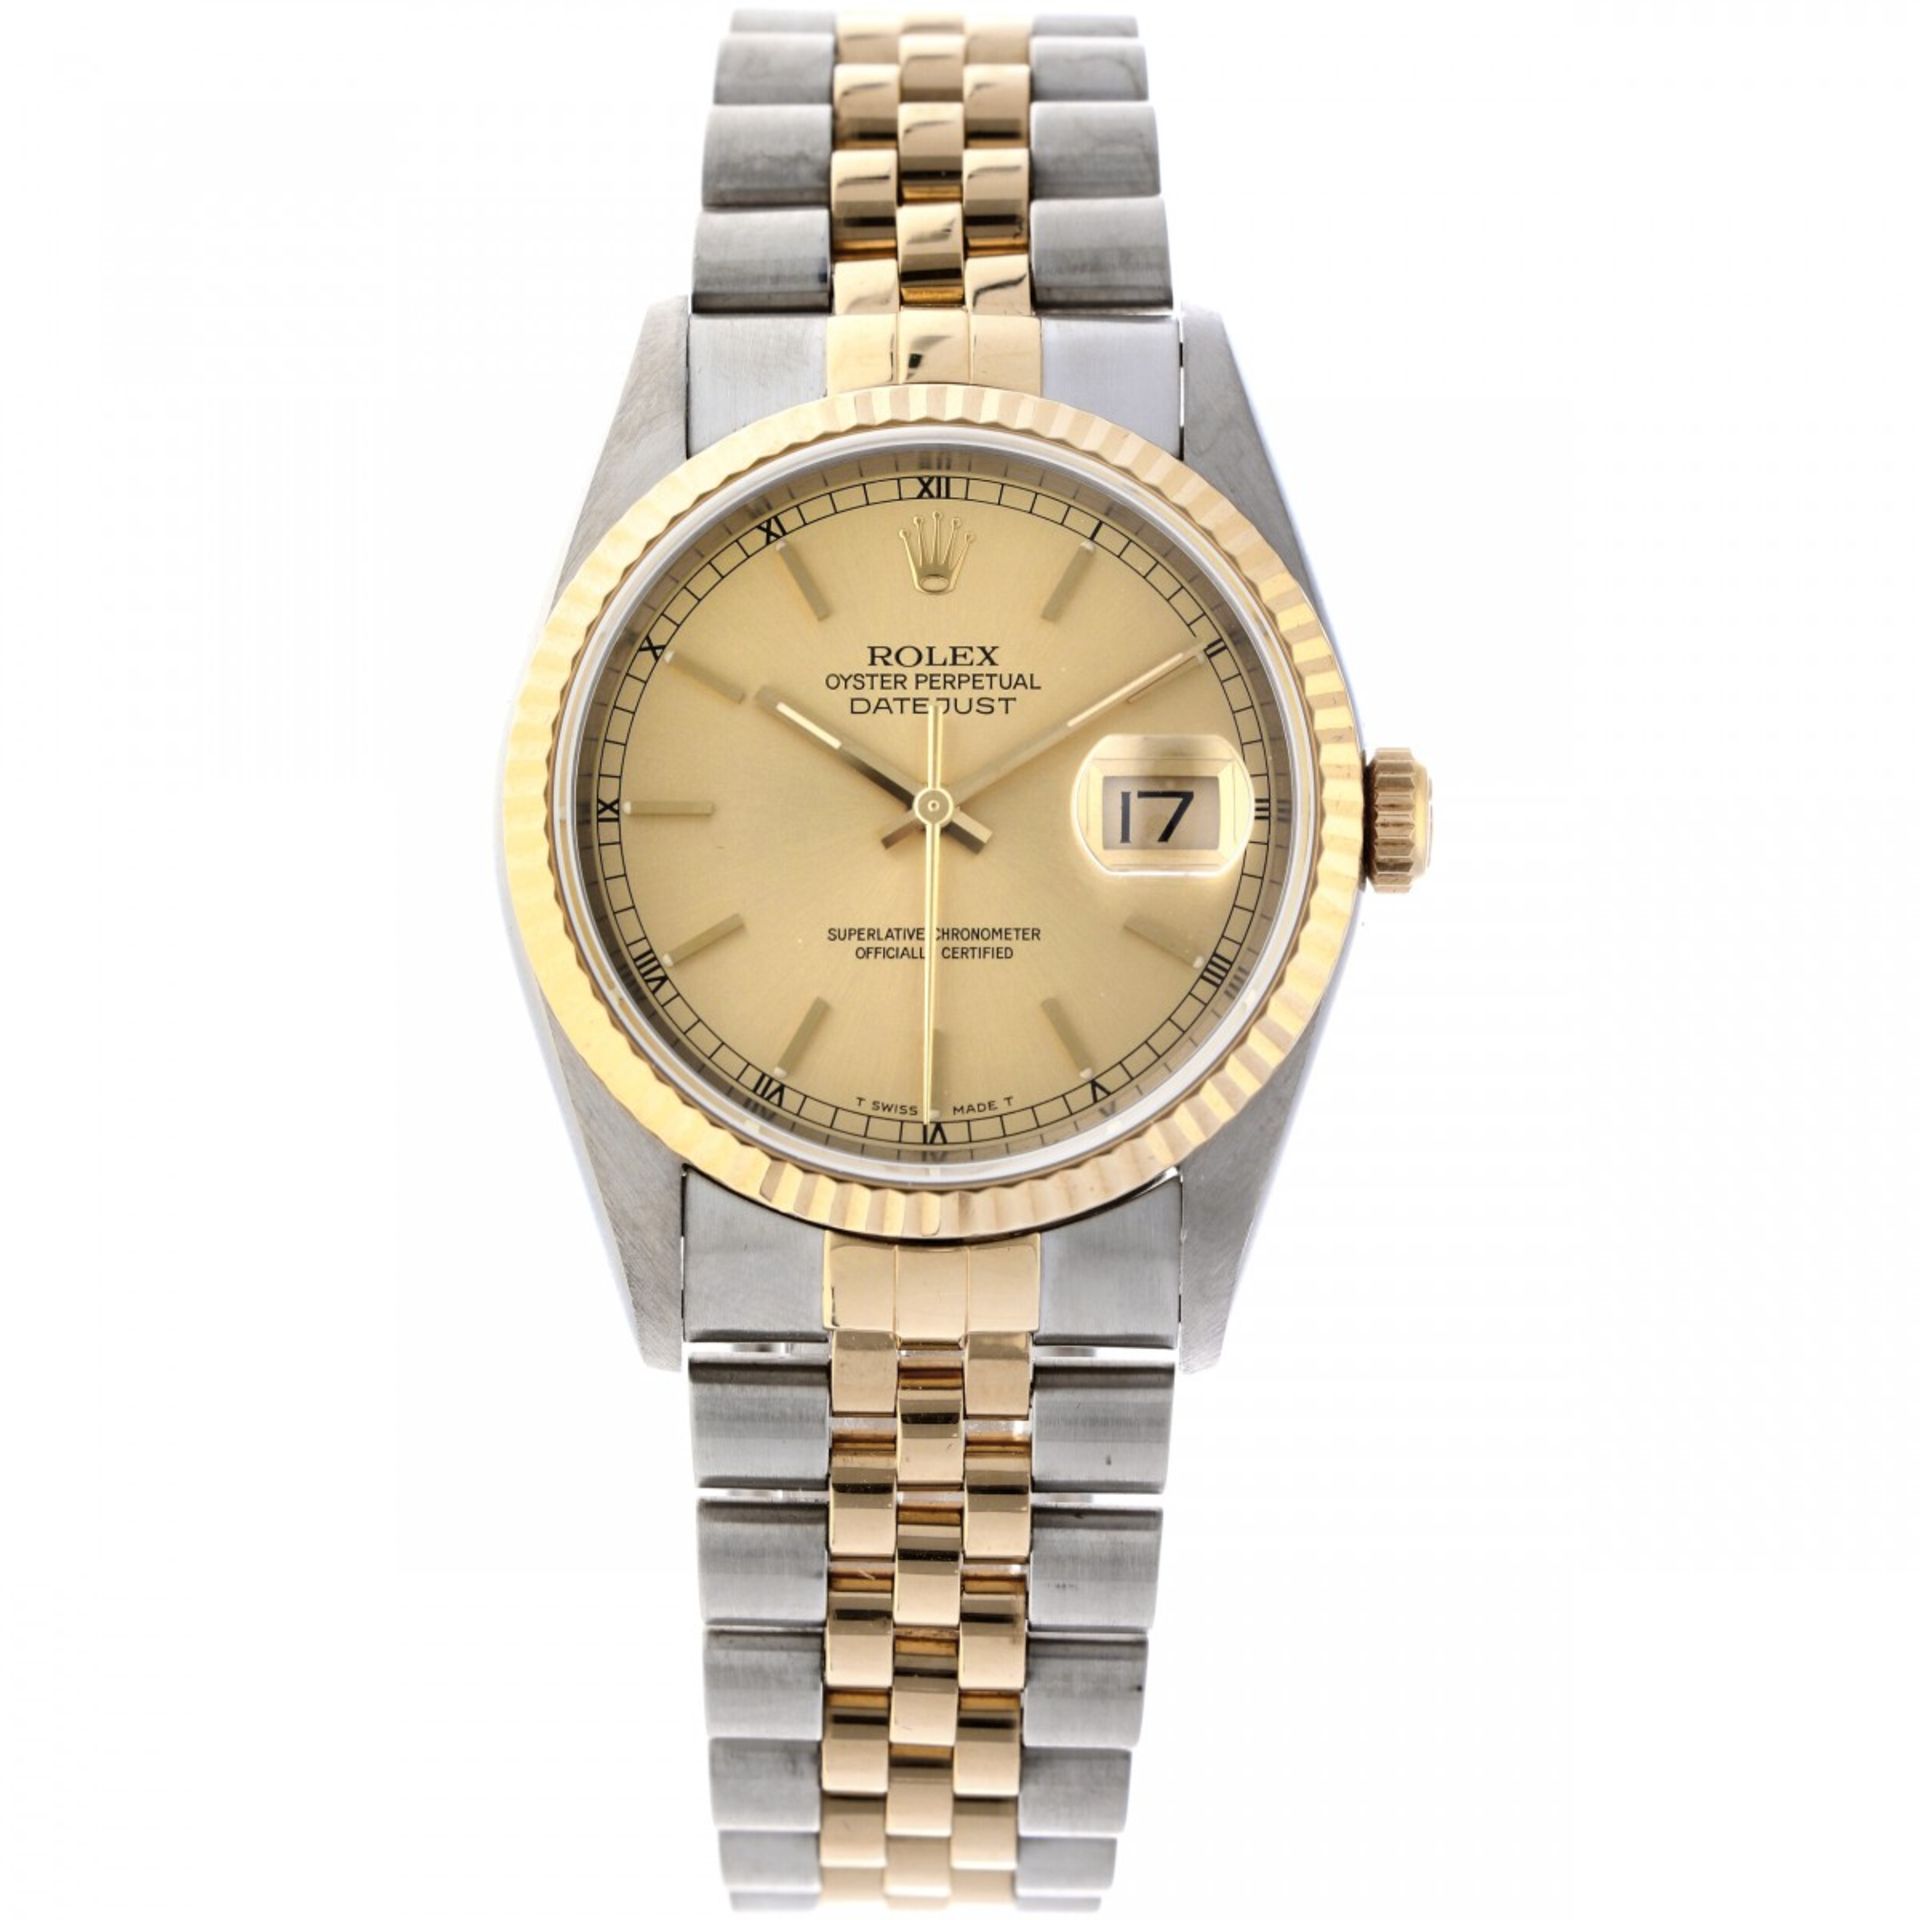 Rolex Datejust 16233 - Men's watch - ca. 1996